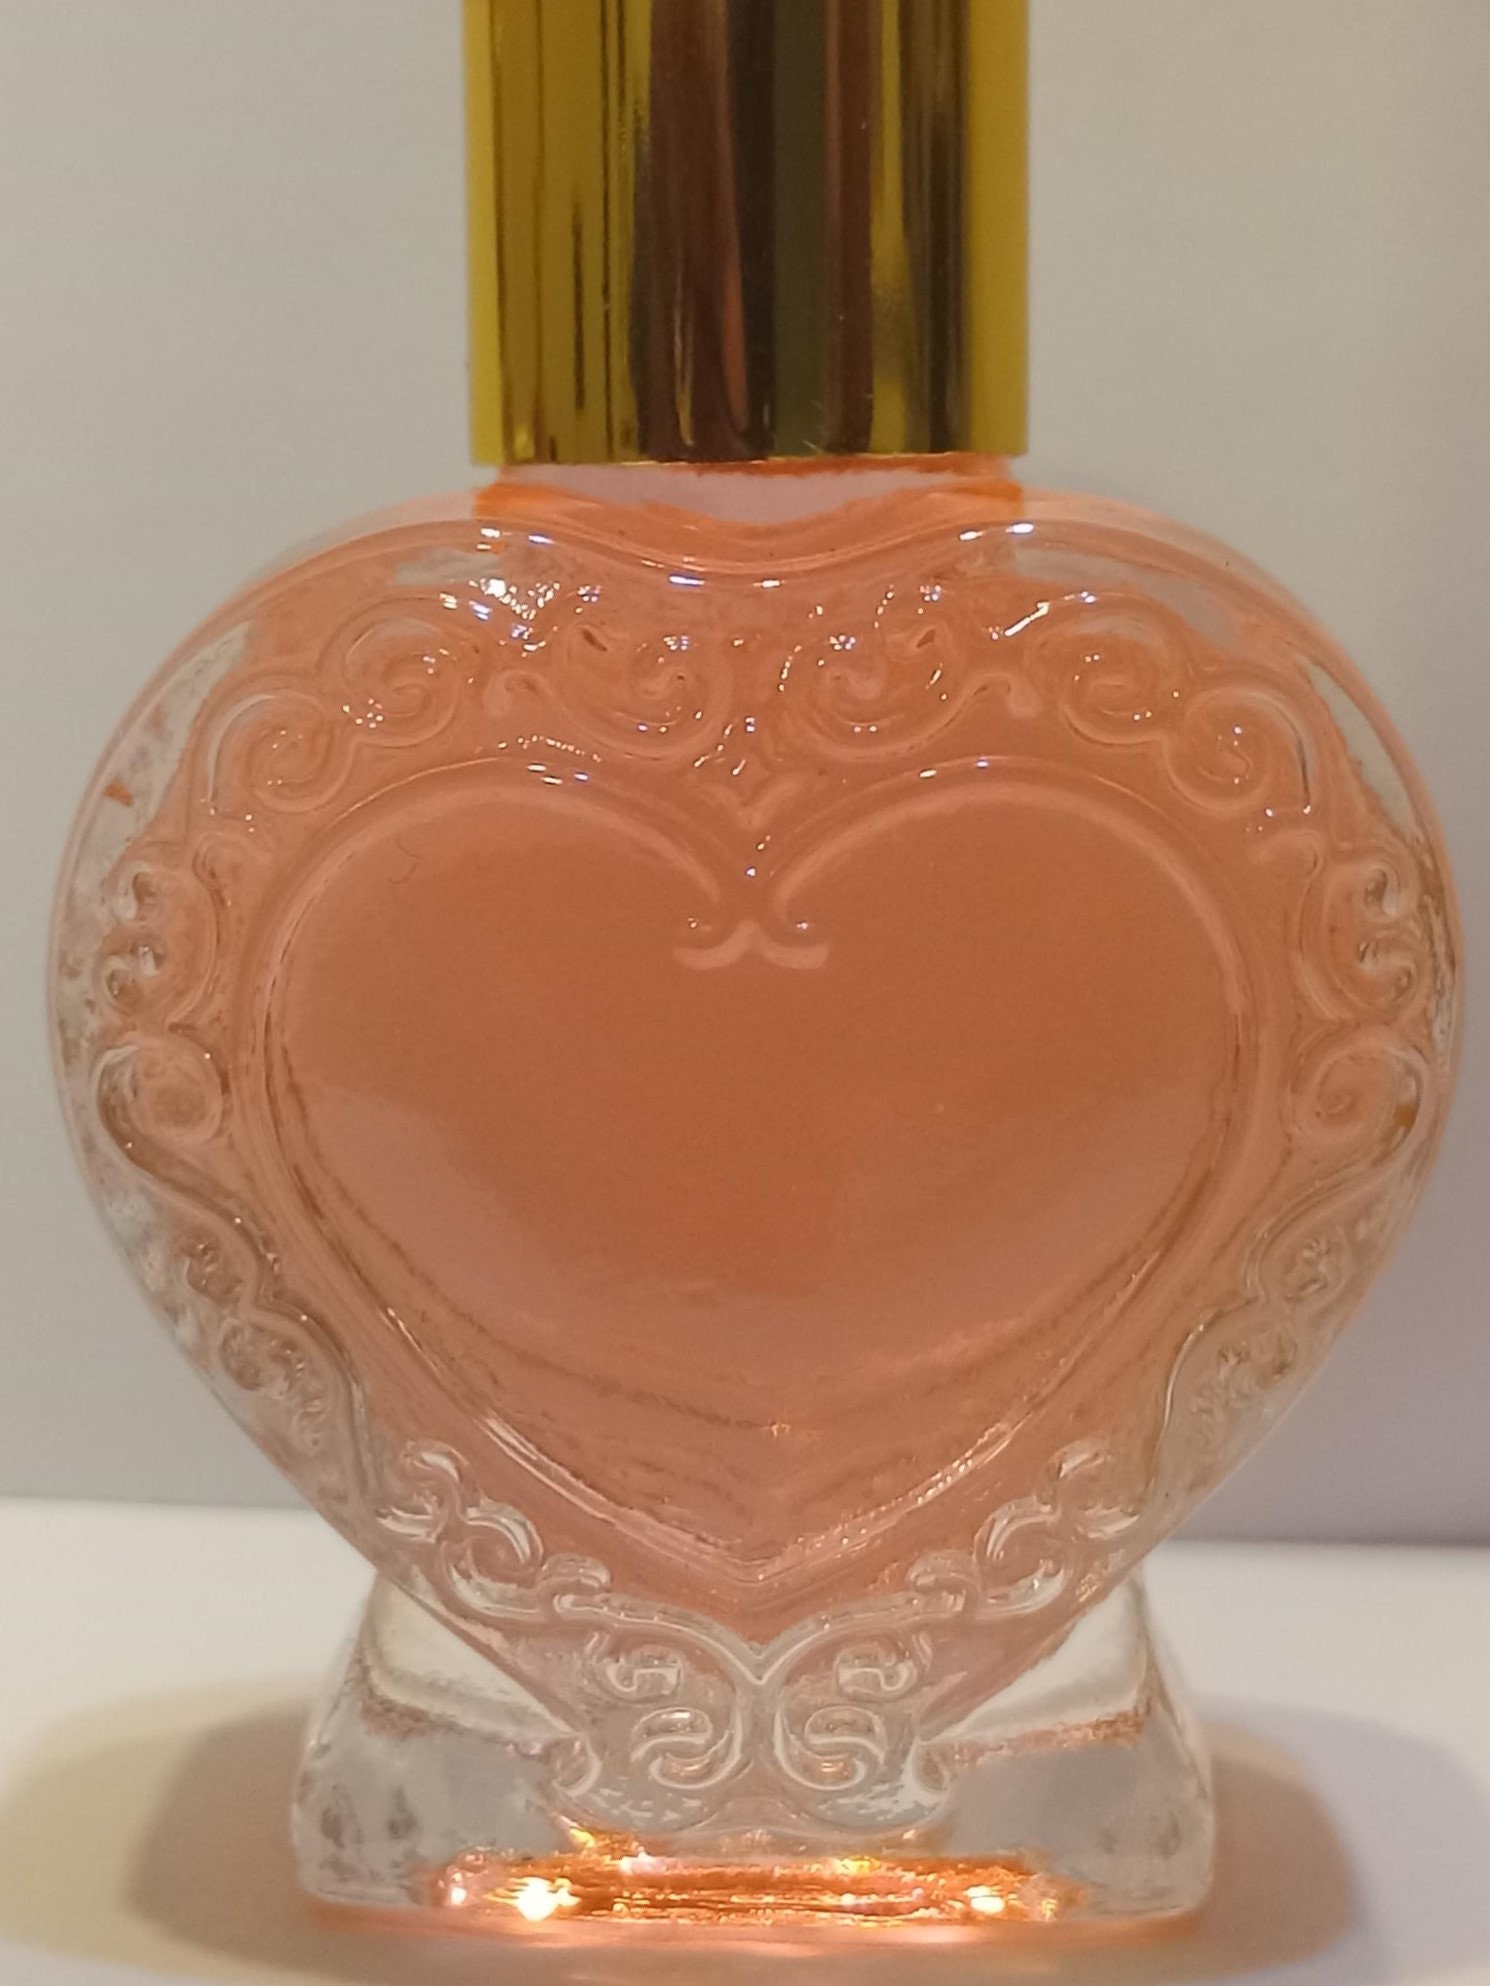 Pussy Cat Perfume Oil - 1.7 oz in Premium Glass Bottle 